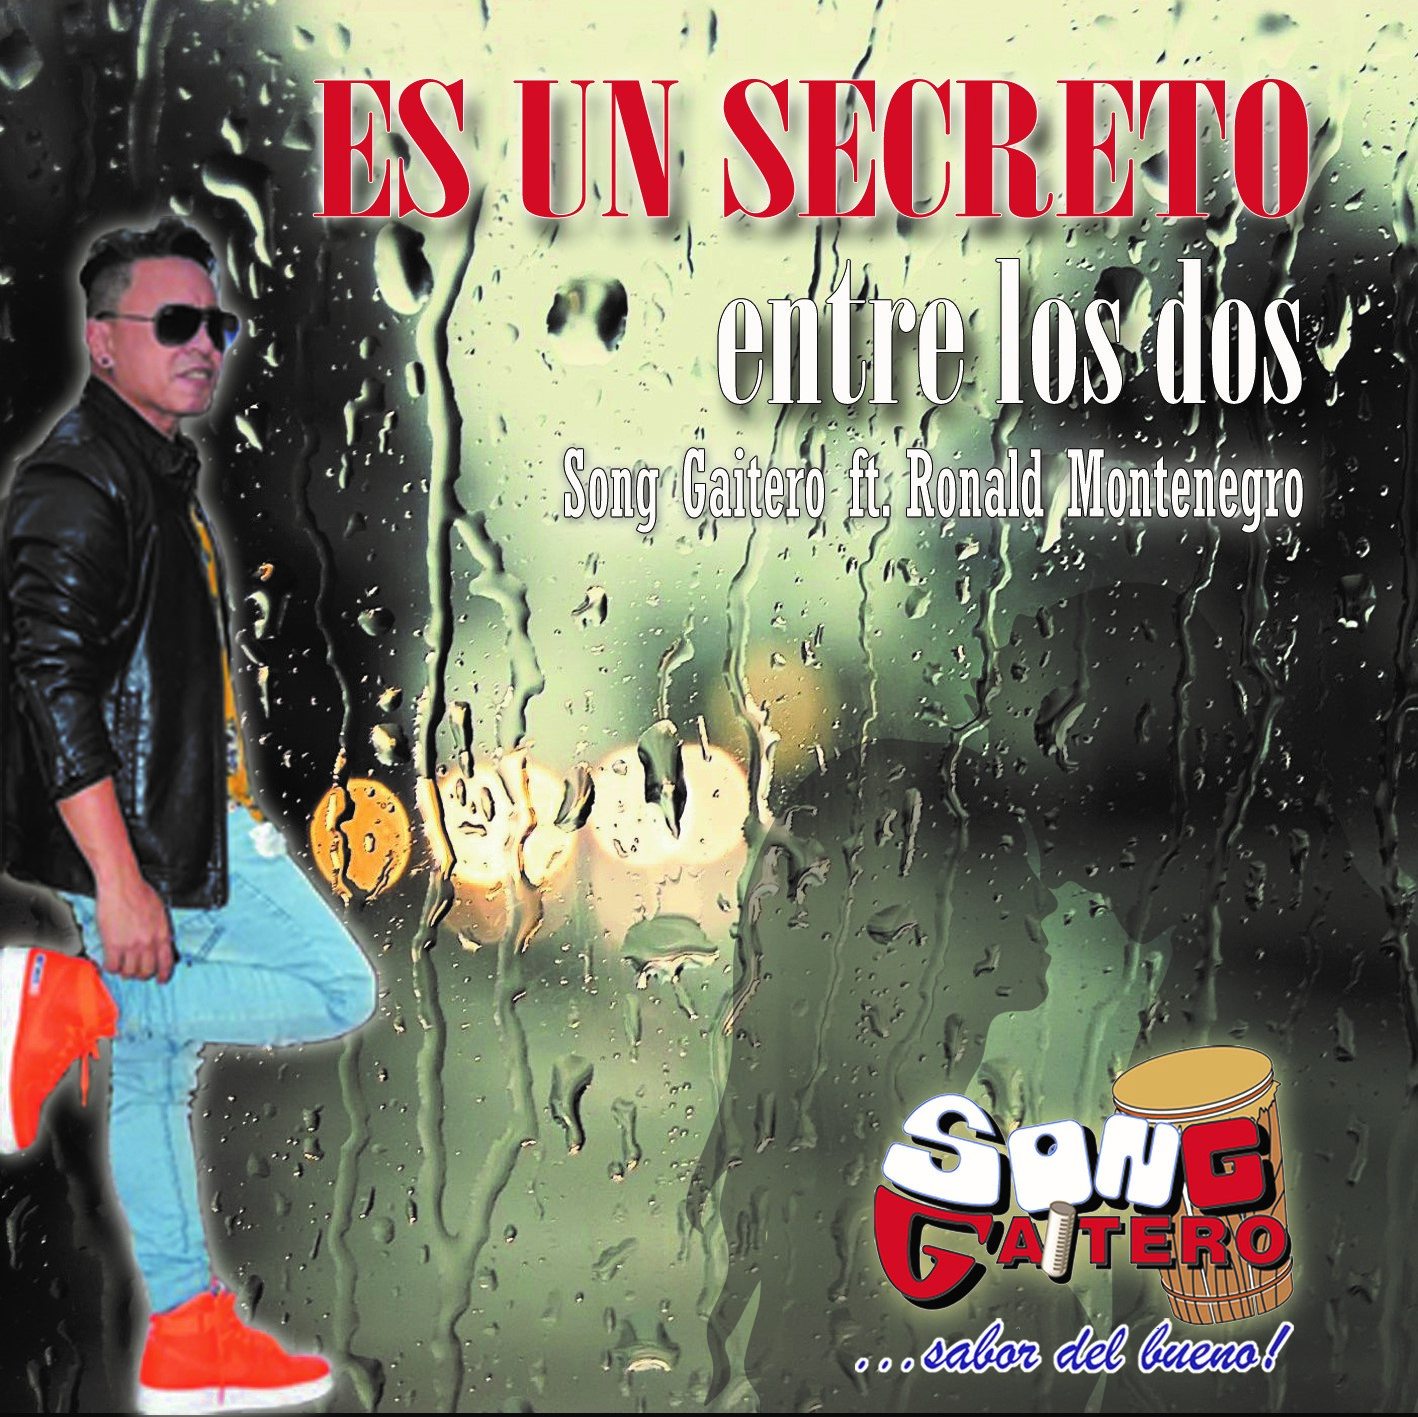 DALE ROMO - song and lyrics by El Moreno Venezolano, Erinson Stylo